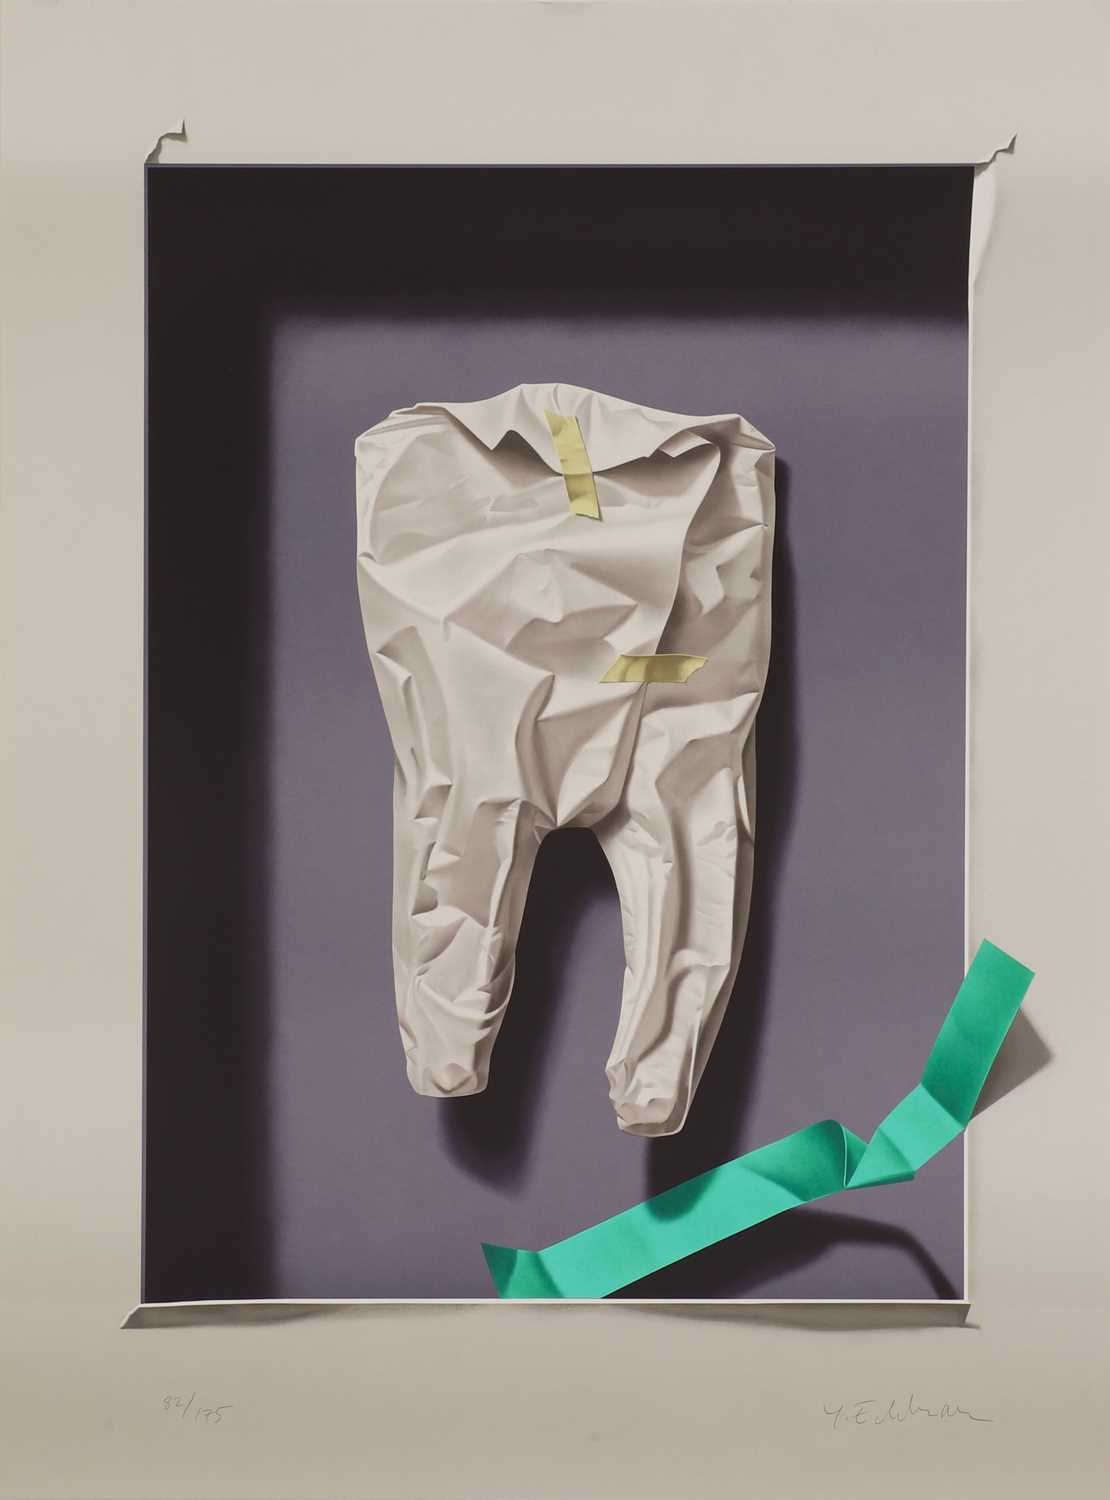 Wrapped tooth by Yrjo Edelmann, 1941